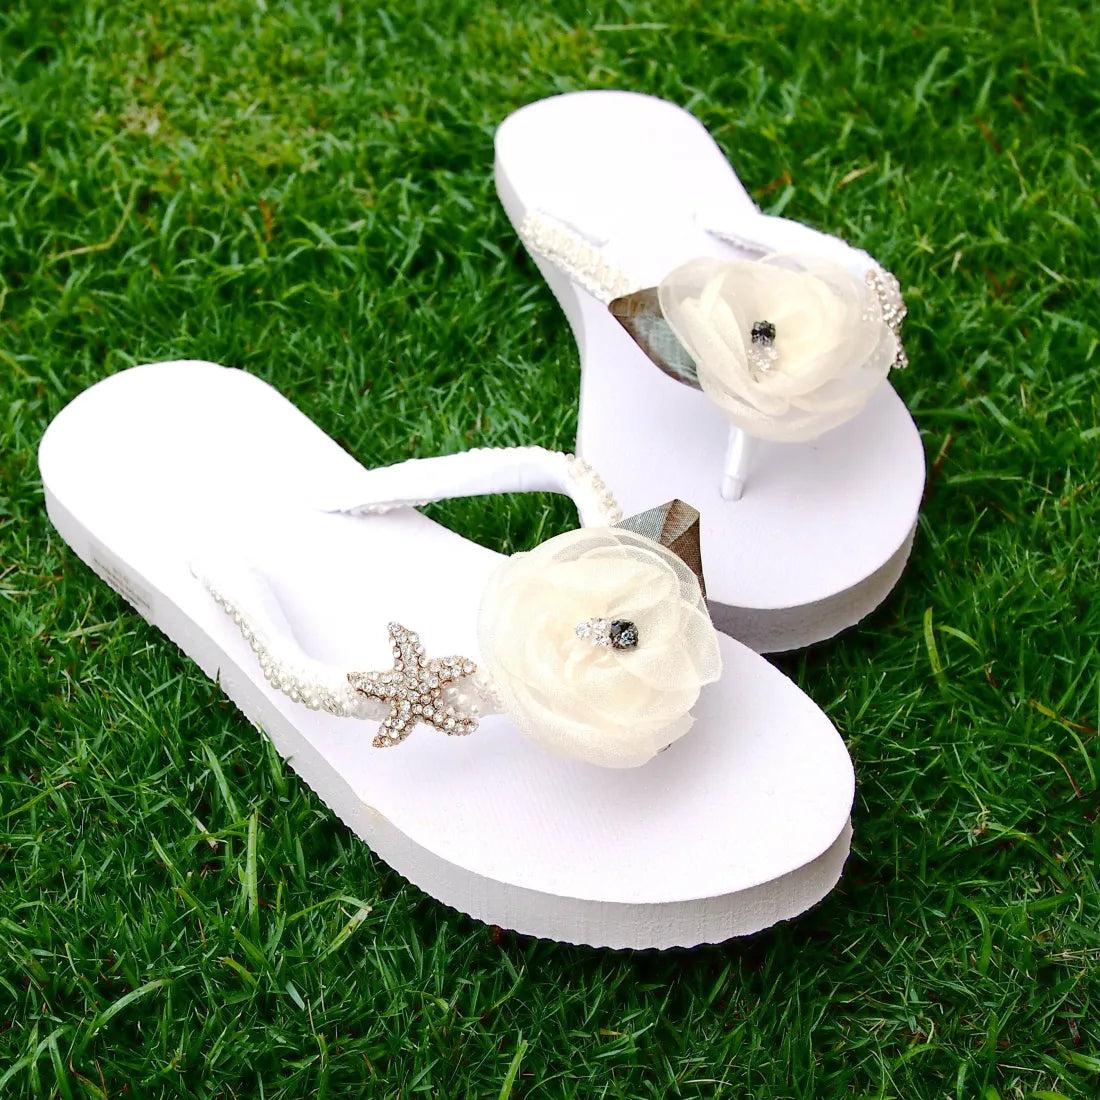 Jewel White Bridal Flip Flops - Made In Hawaii